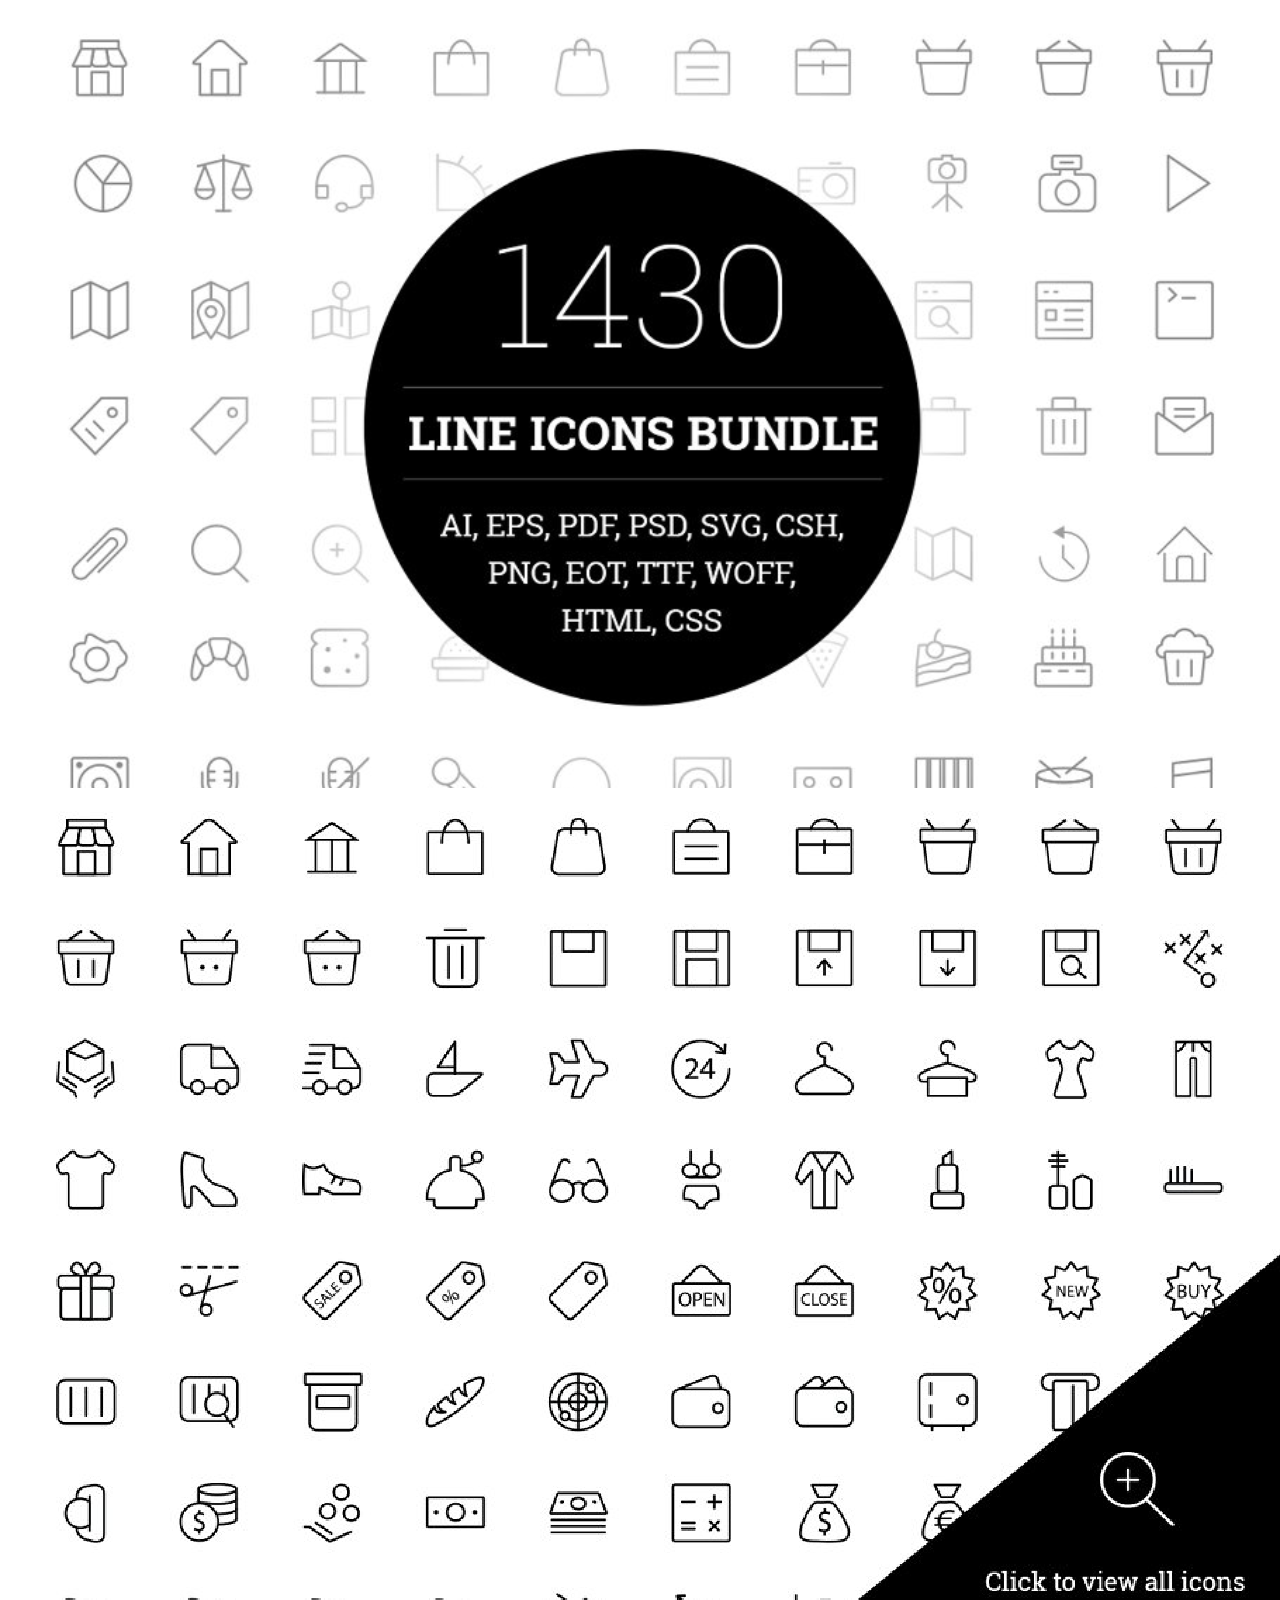 1430 line icons bundle pinterest image preview.